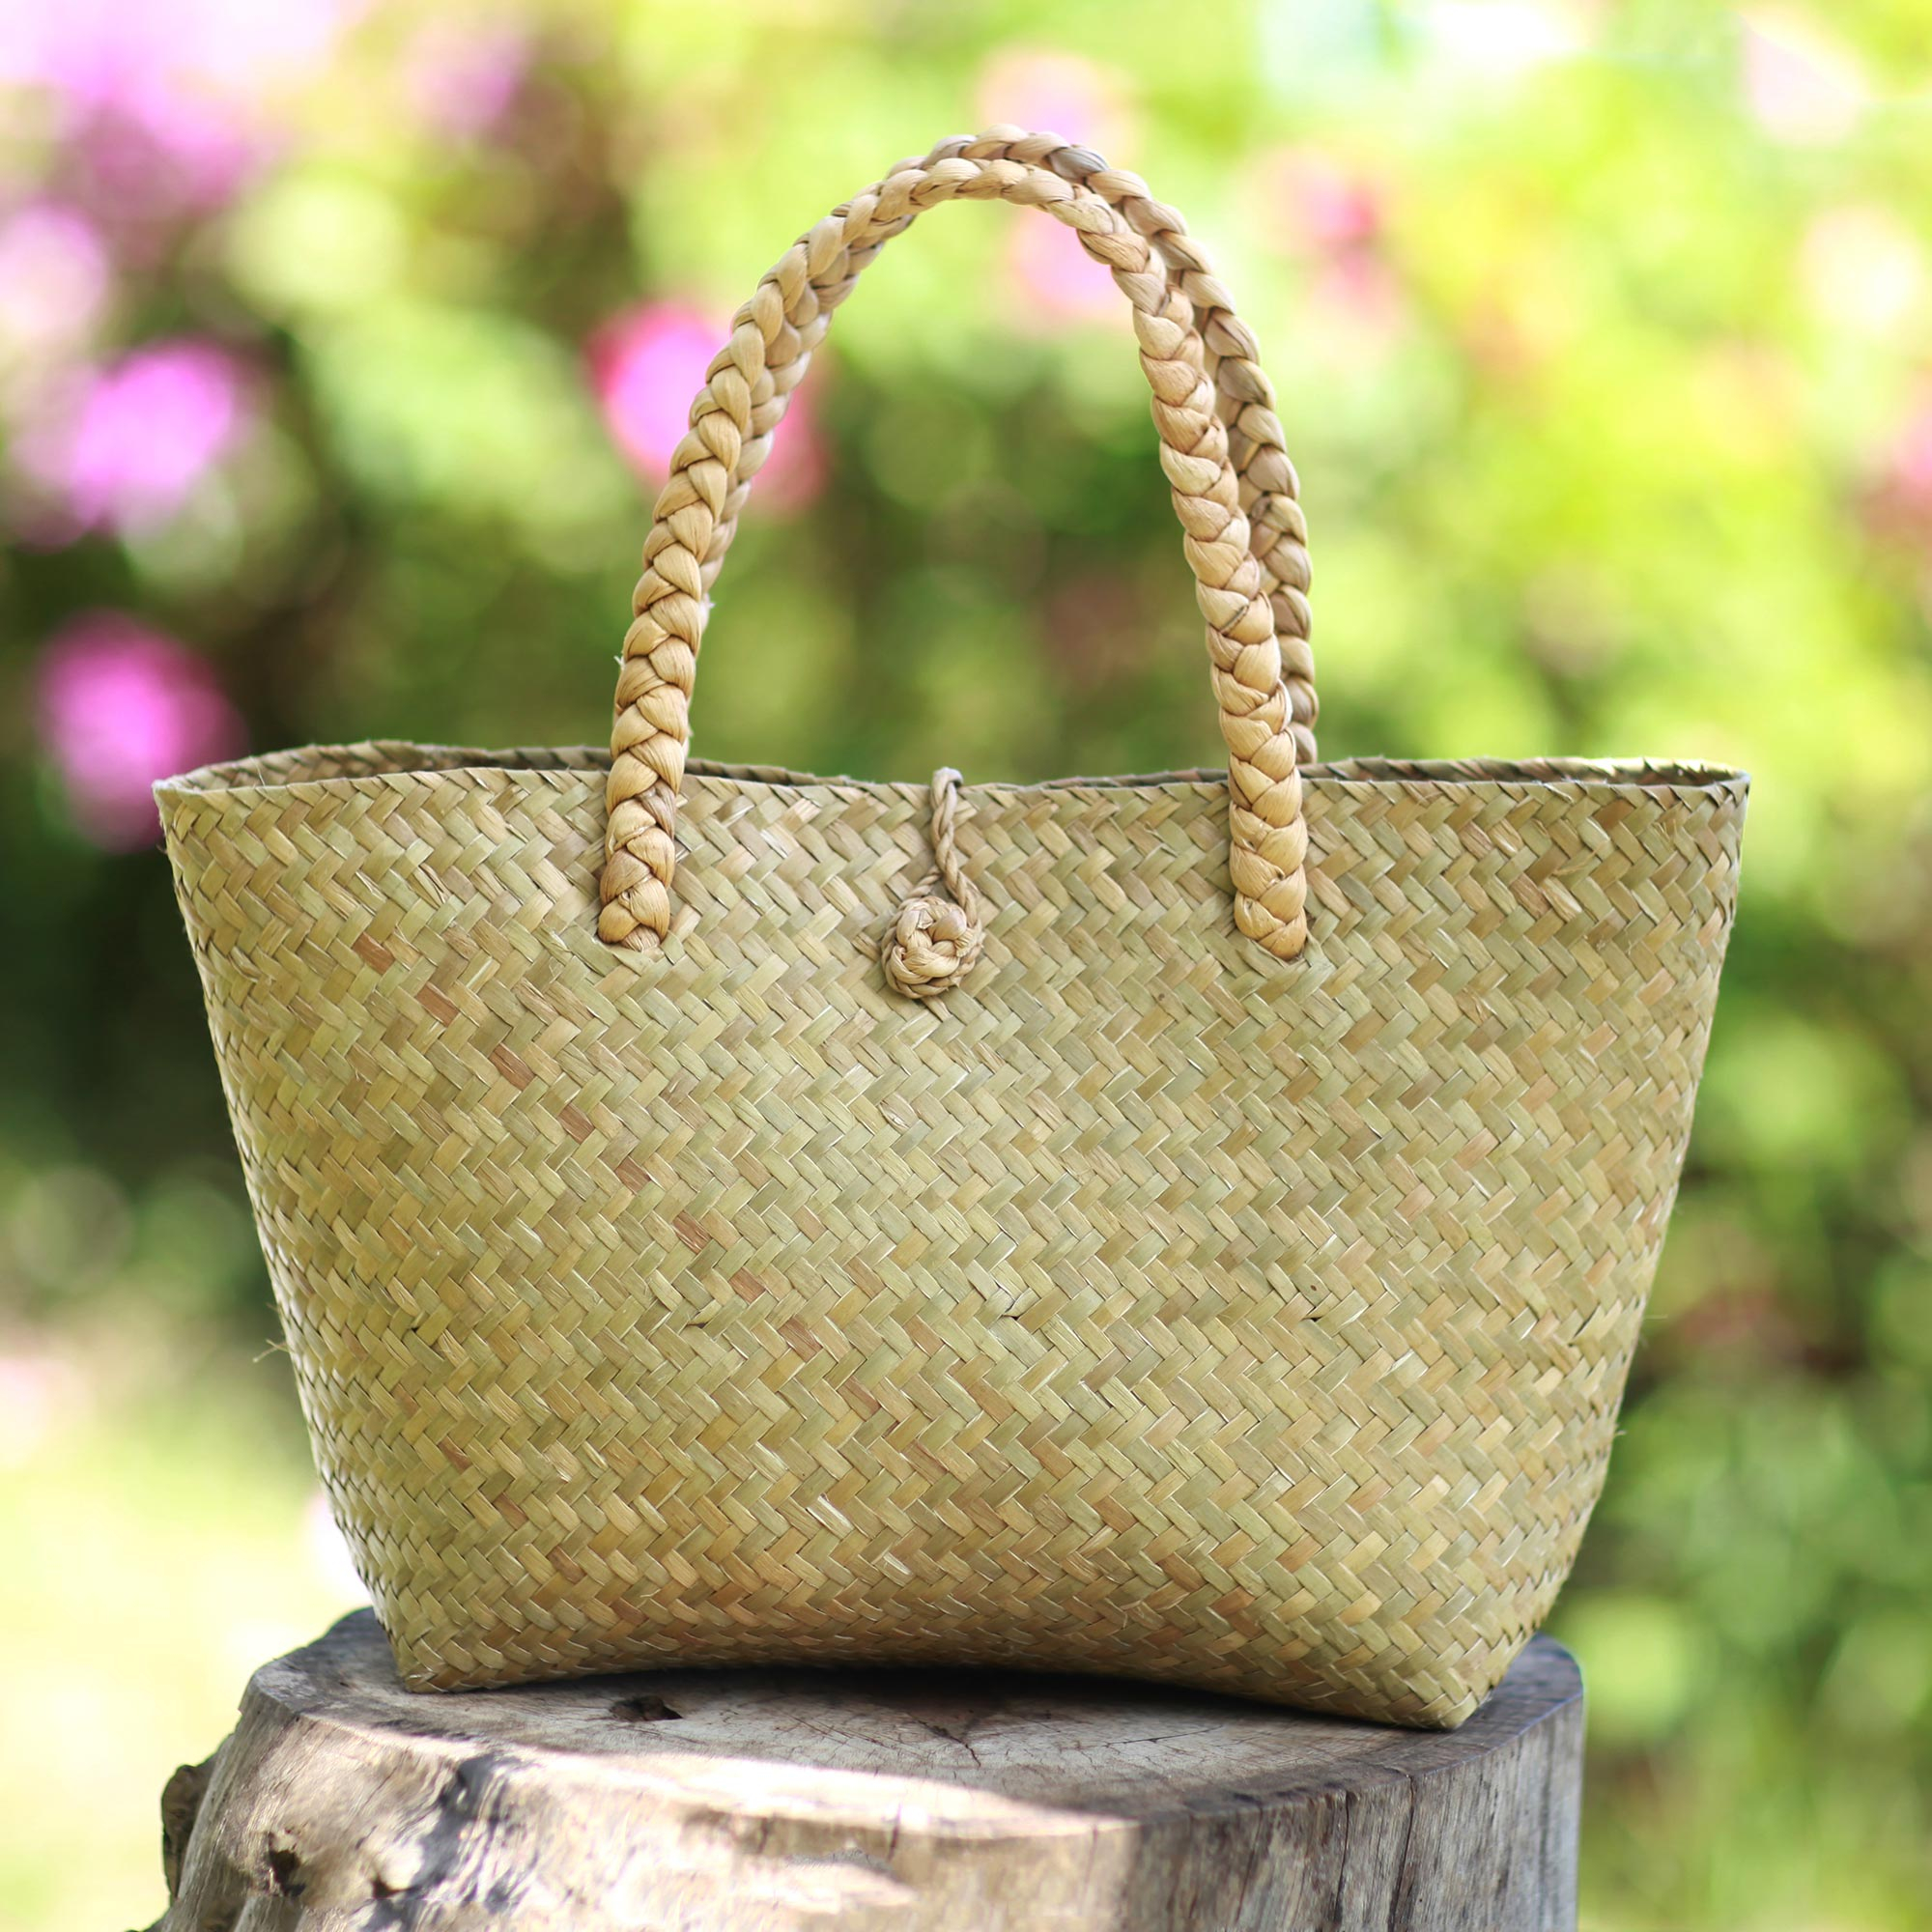 Handmade Natural Fiber Tote Bag from Bali - Easy Trip | NOVICA